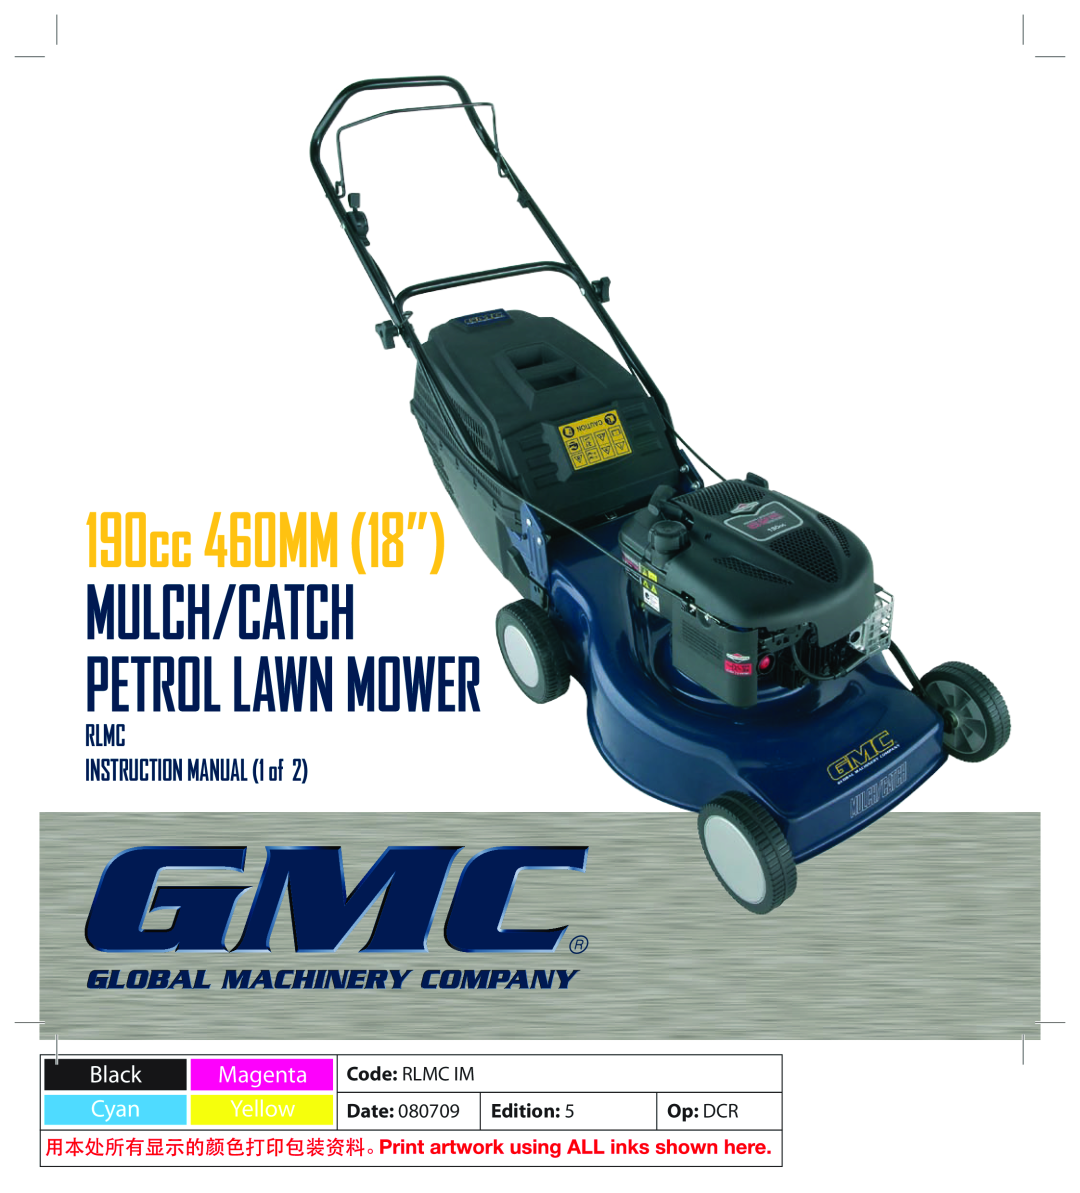 Global Machinery Company instruction manual Code RLMC IM, 190cc 460MM 18”, Mulch/Catch Petrol Lawn Mower 